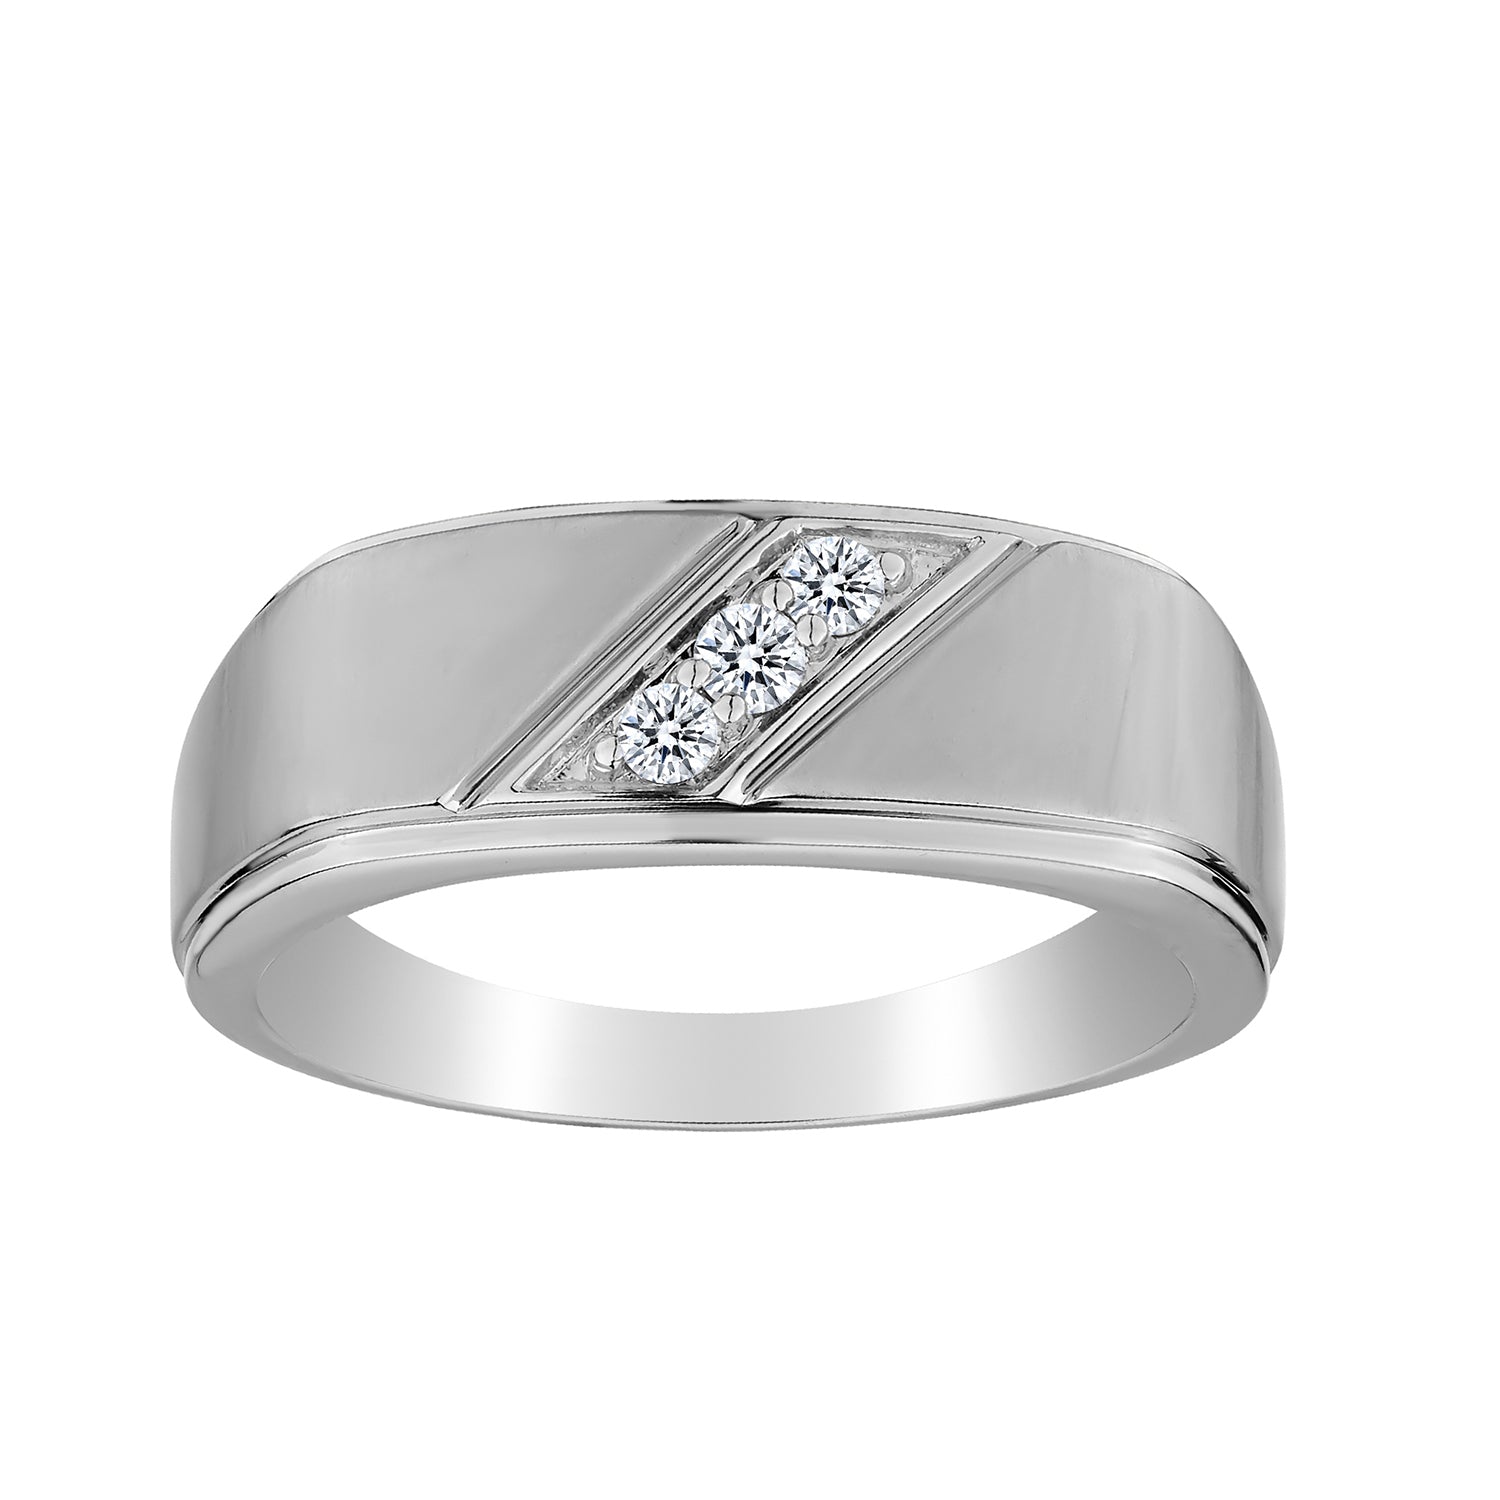 .15 CARAT DIAMOND GENTLEMAN'S RING, 10kt WHITE GOLD. Men’s Rings. - Griffin Jewellery Designs